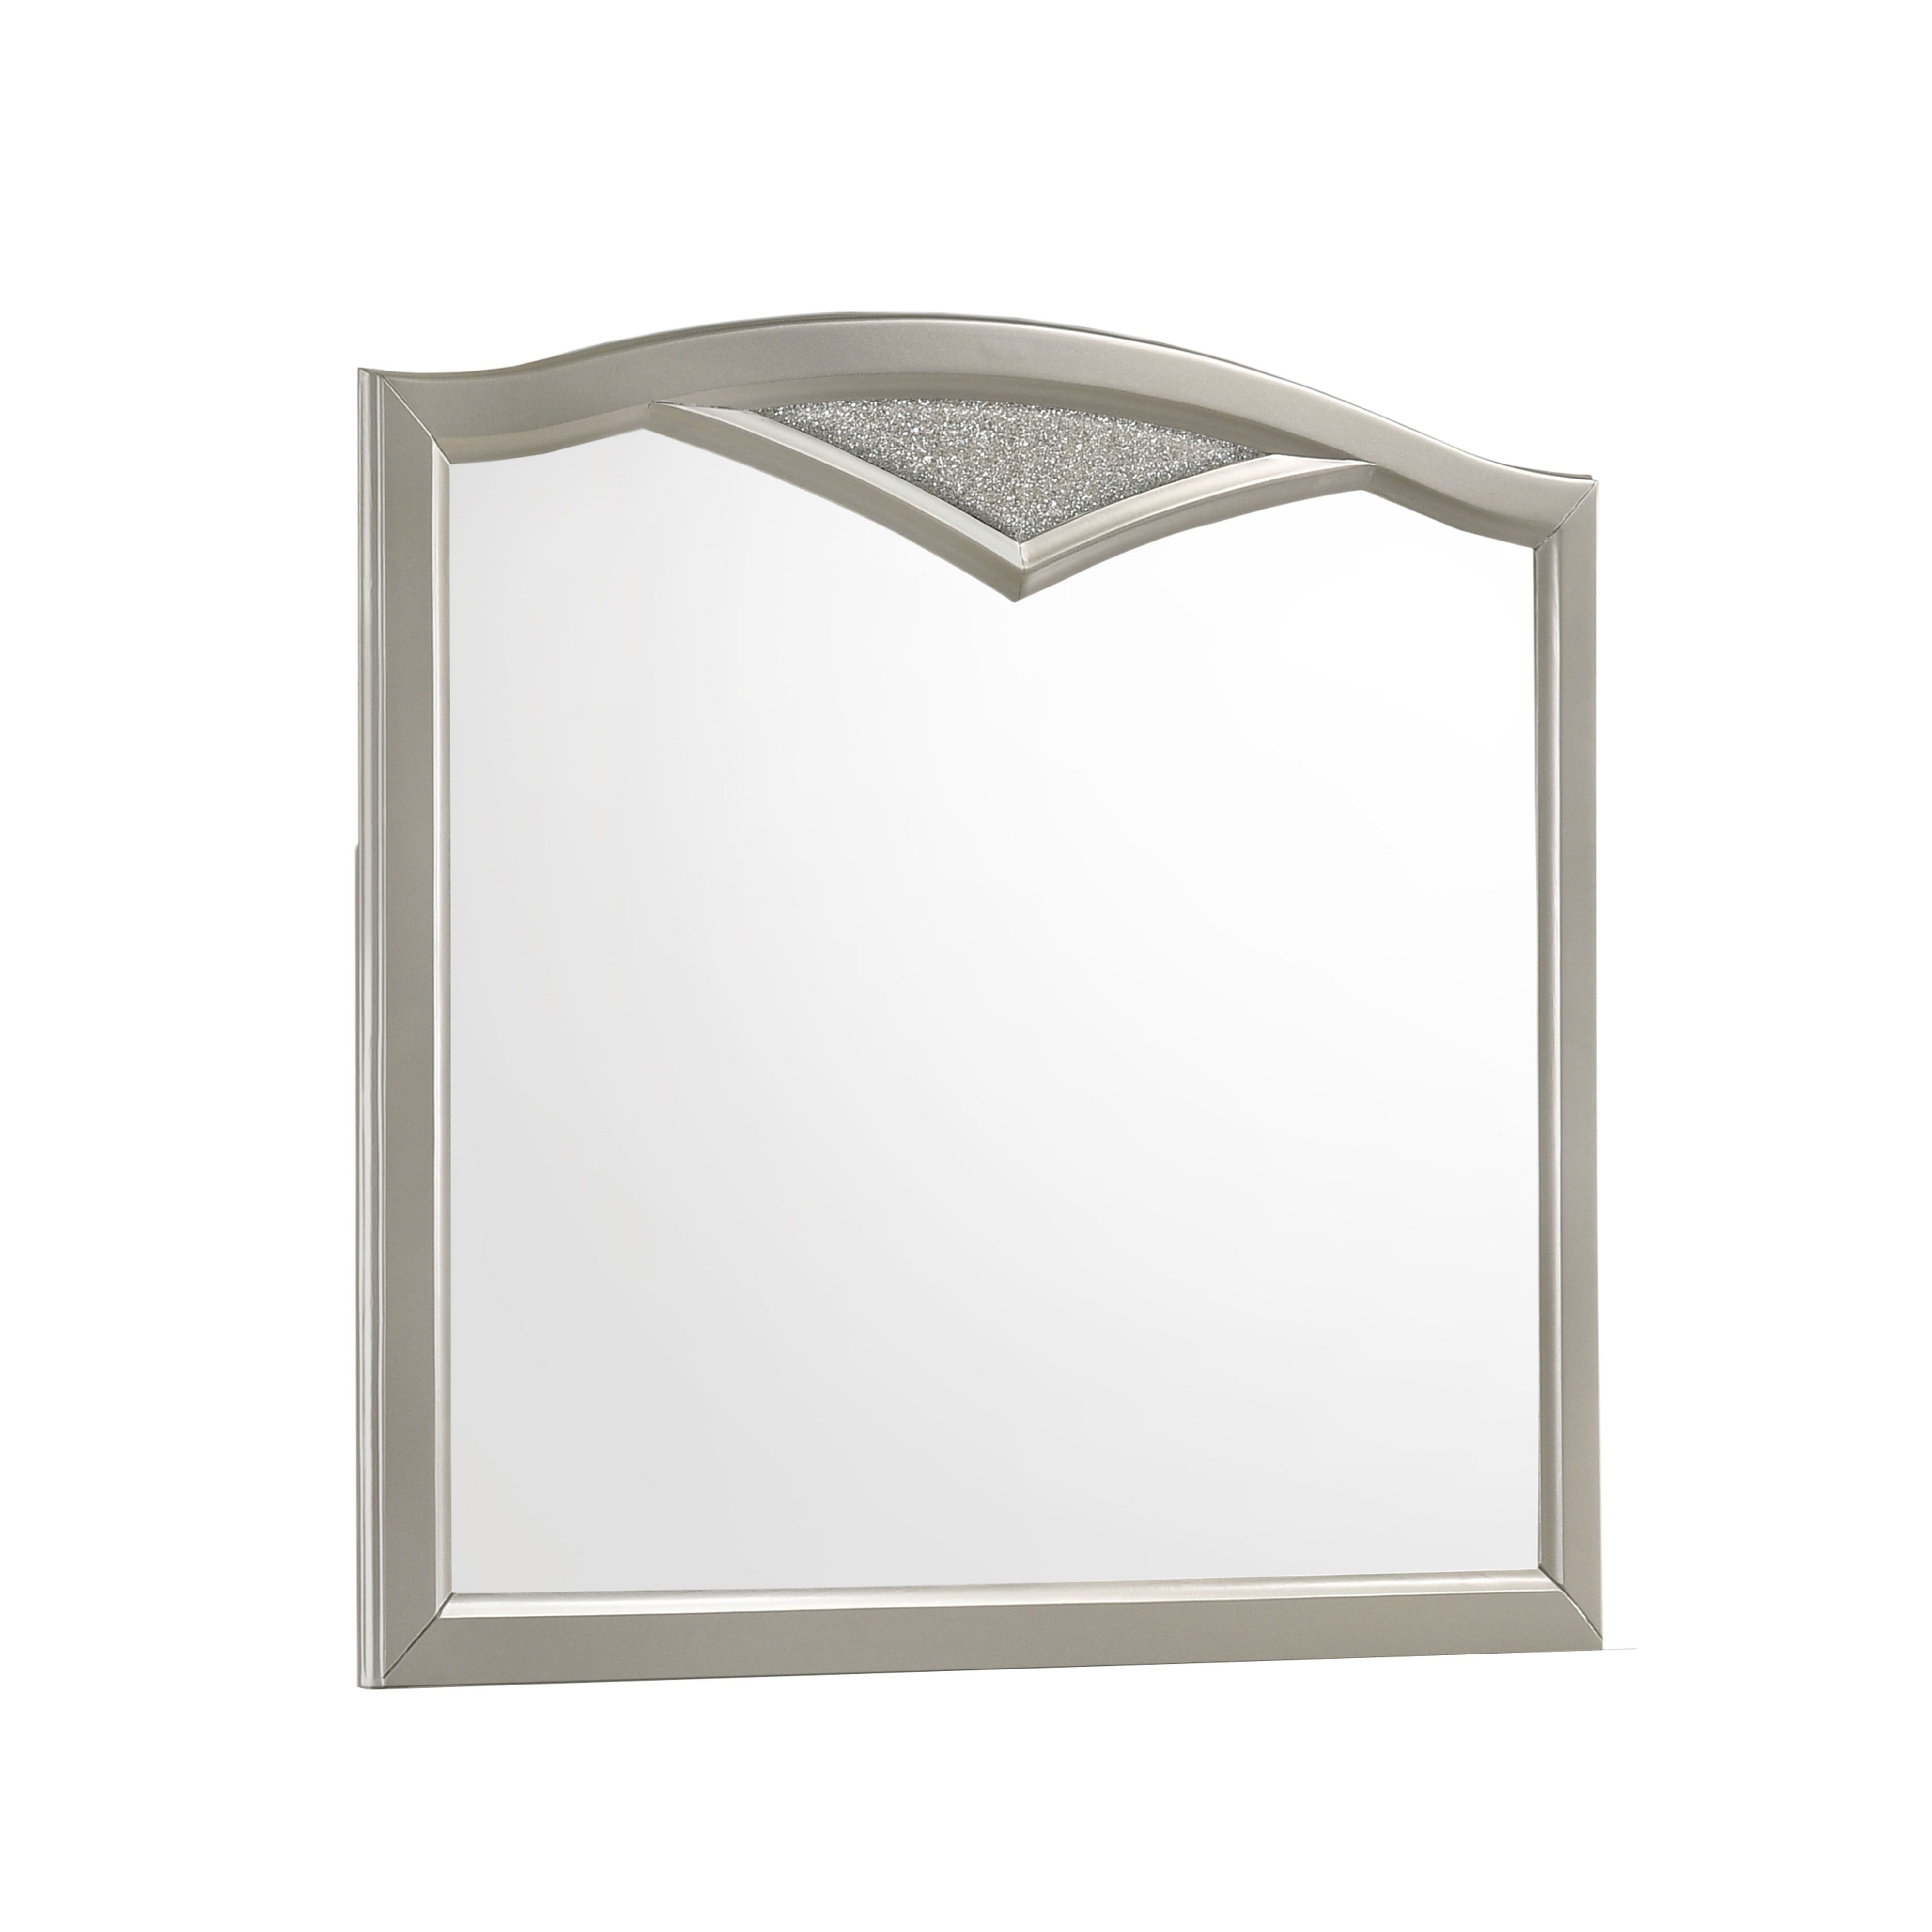 Benzara Camelback Dresser Top Beveled Mirror With Faux Diamond Inlay, Silver - Bm215416 By Benzara Mirrors BM215416